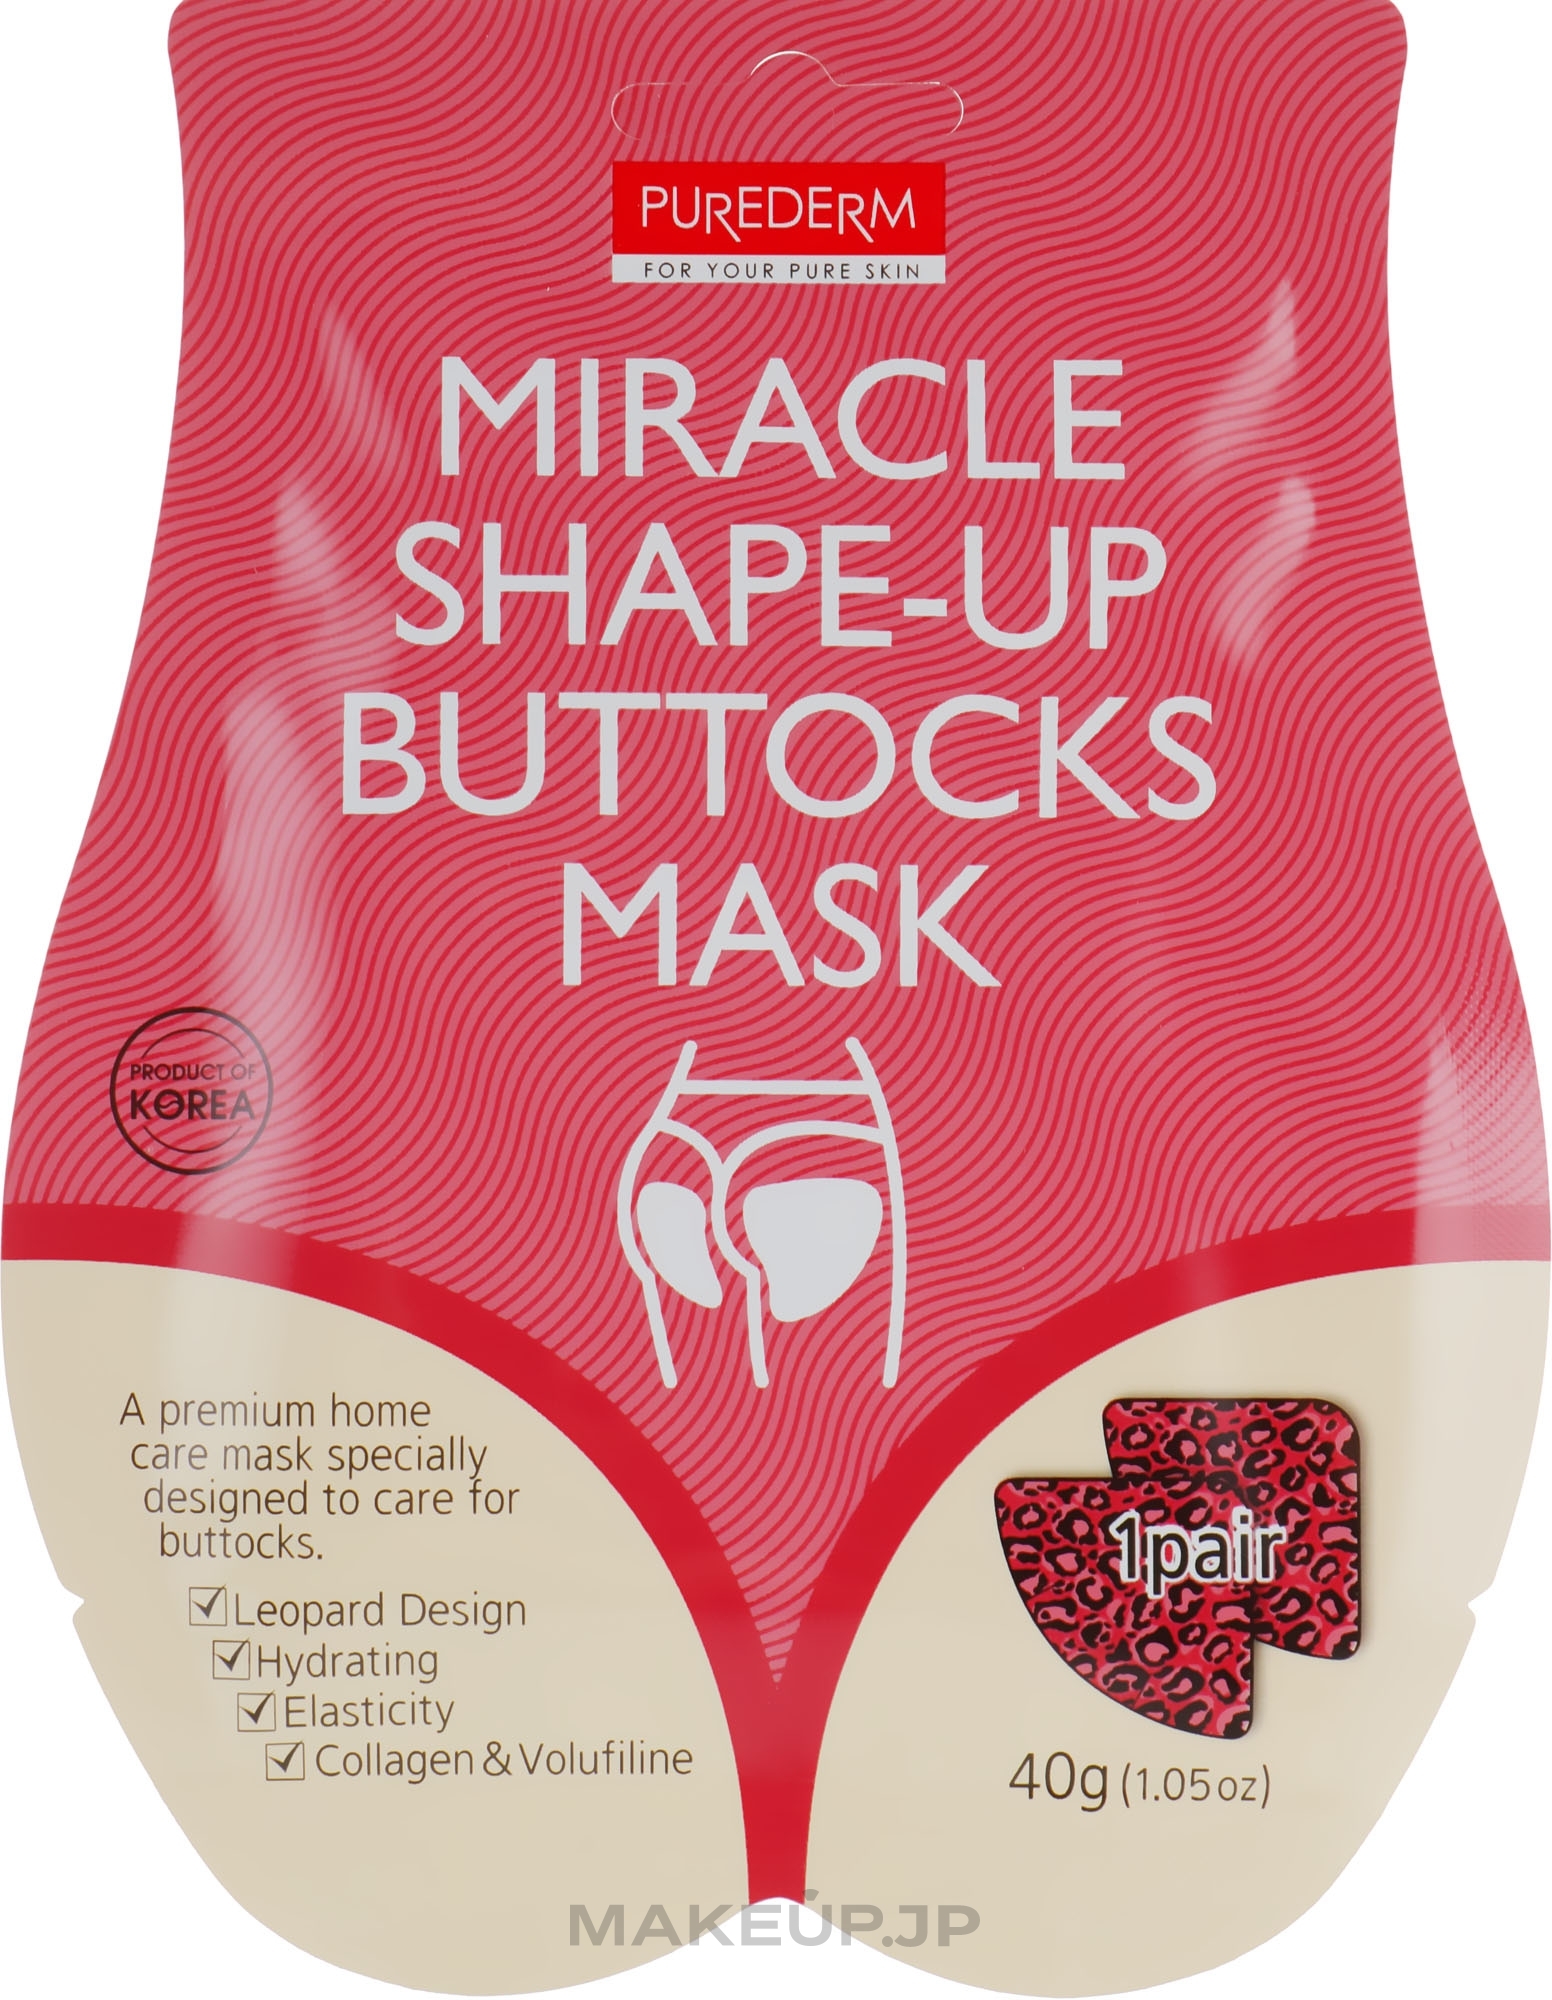 Shape-Up Buttocks Mask - Purederm Miracle Shape-Up Buttocks Mask — photo 40 g